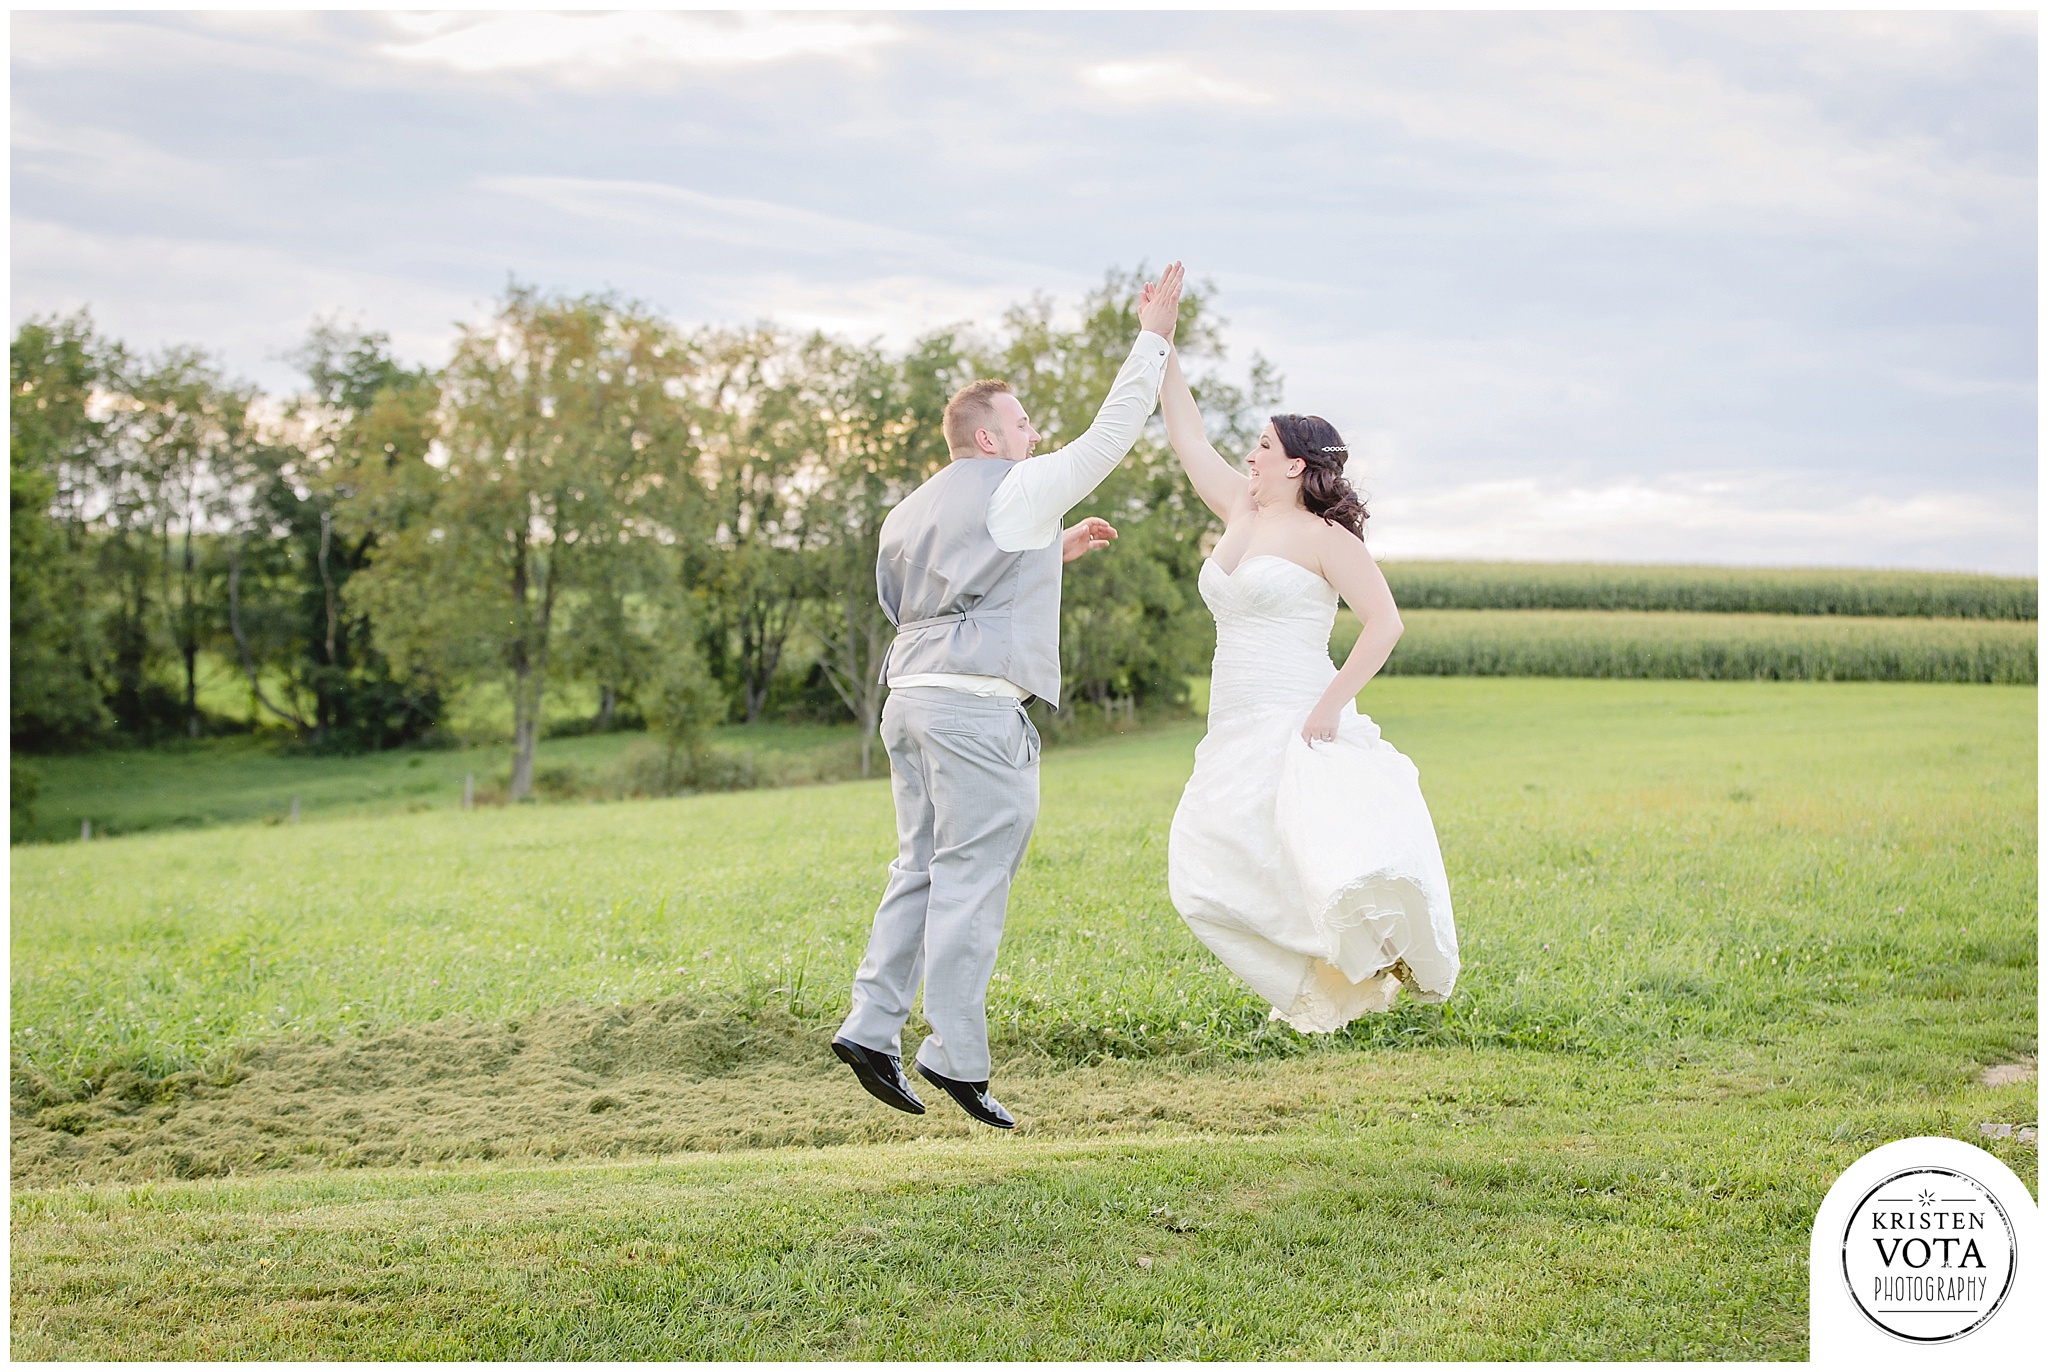 Newlyweds high-fiving at their rustic farm wedding in western Pennsylvania.